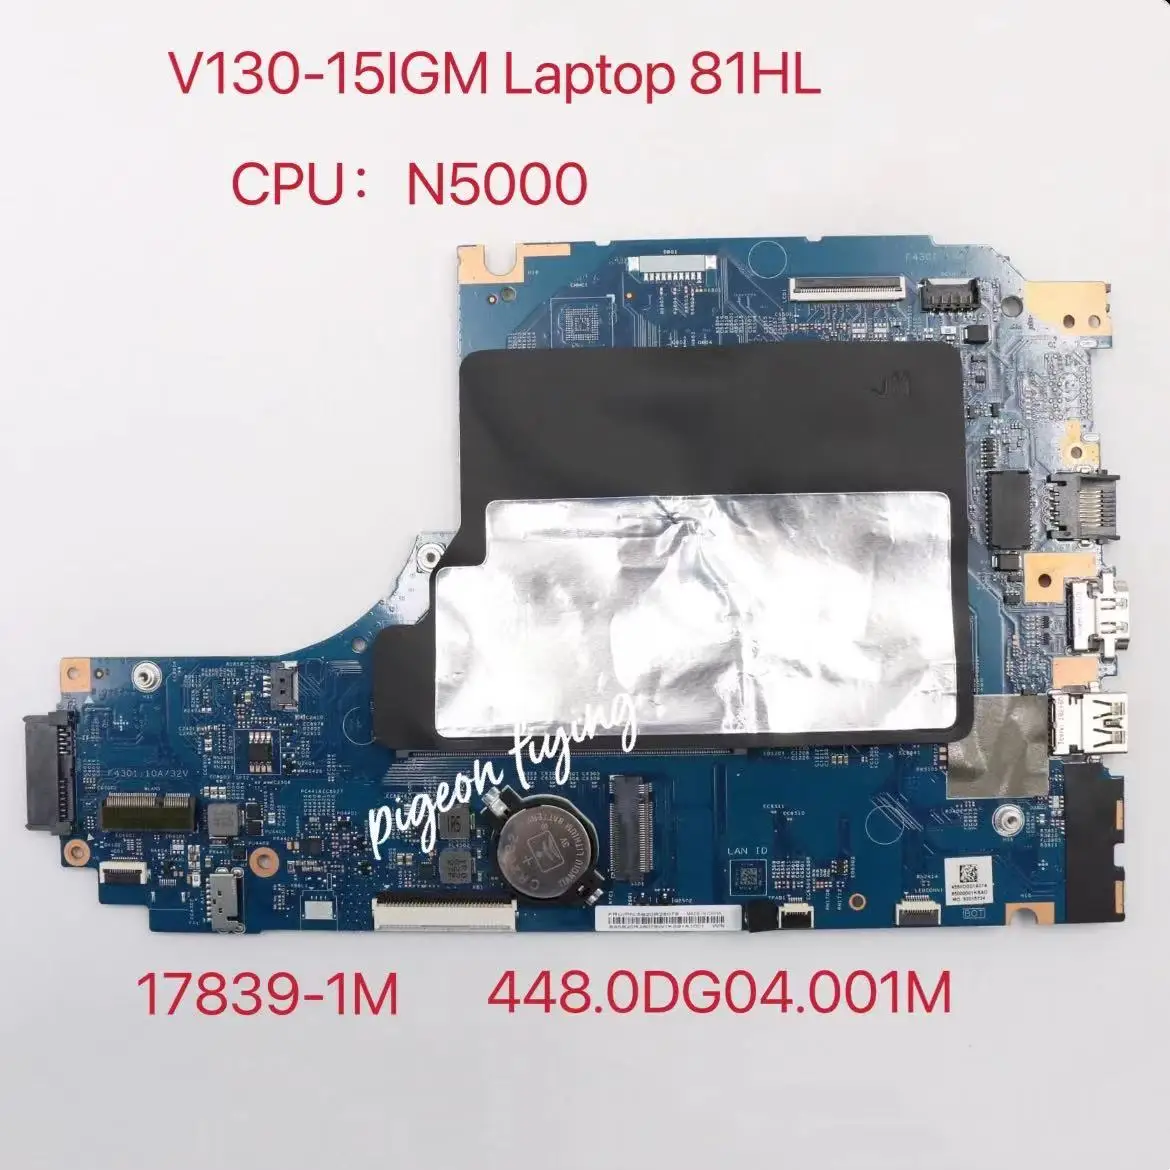 

LV315GM-MB for Lenovo V130-15IGM Laptop Motherboard 81B4 WIN N5000 CPU UMA 17839-1M FRU:5B20R28079 5B20R28084 100% Test Ok